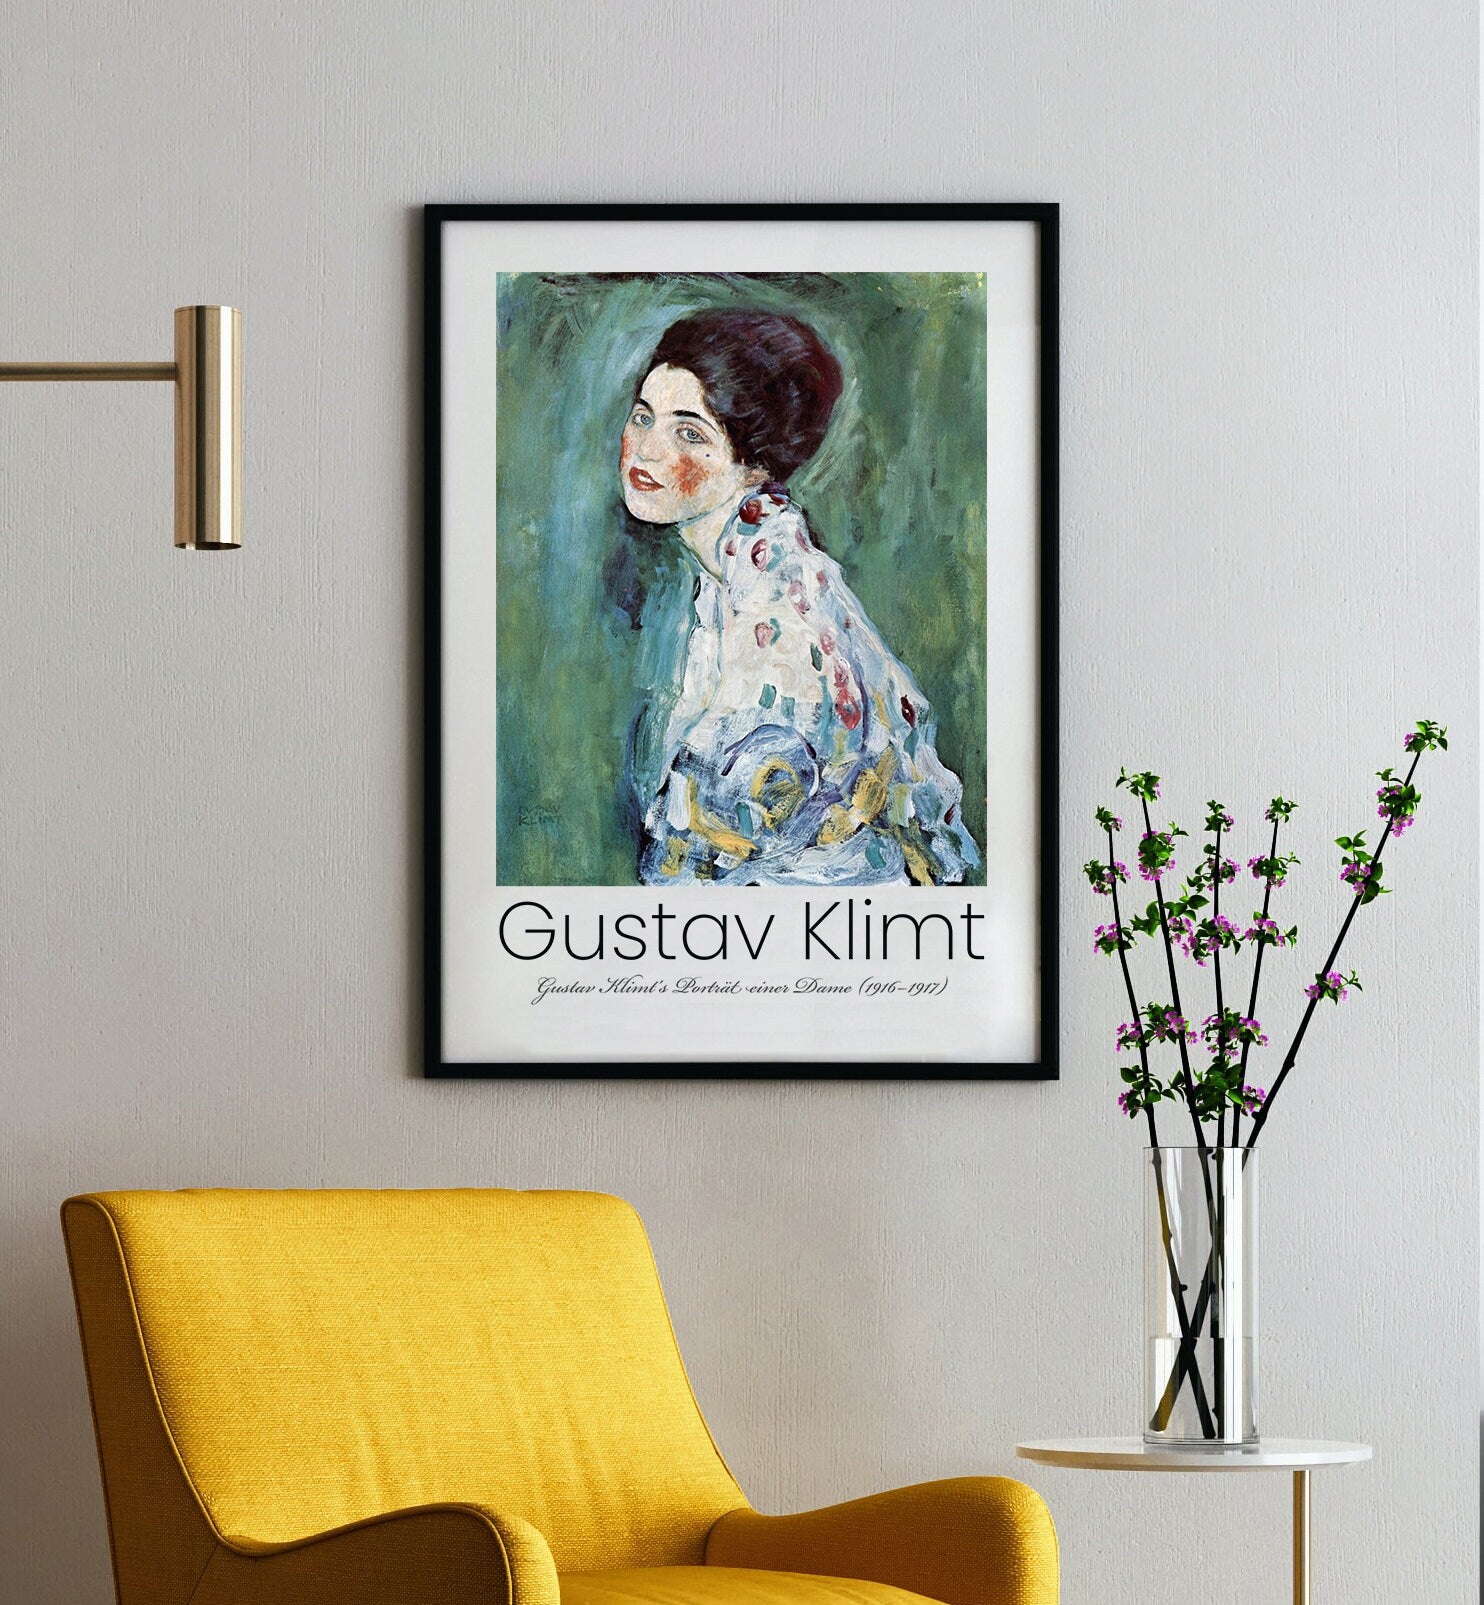 Gustav Klimt Print Set of 3 Exhibition Art, Exhibition Poster, Large Wall Decor